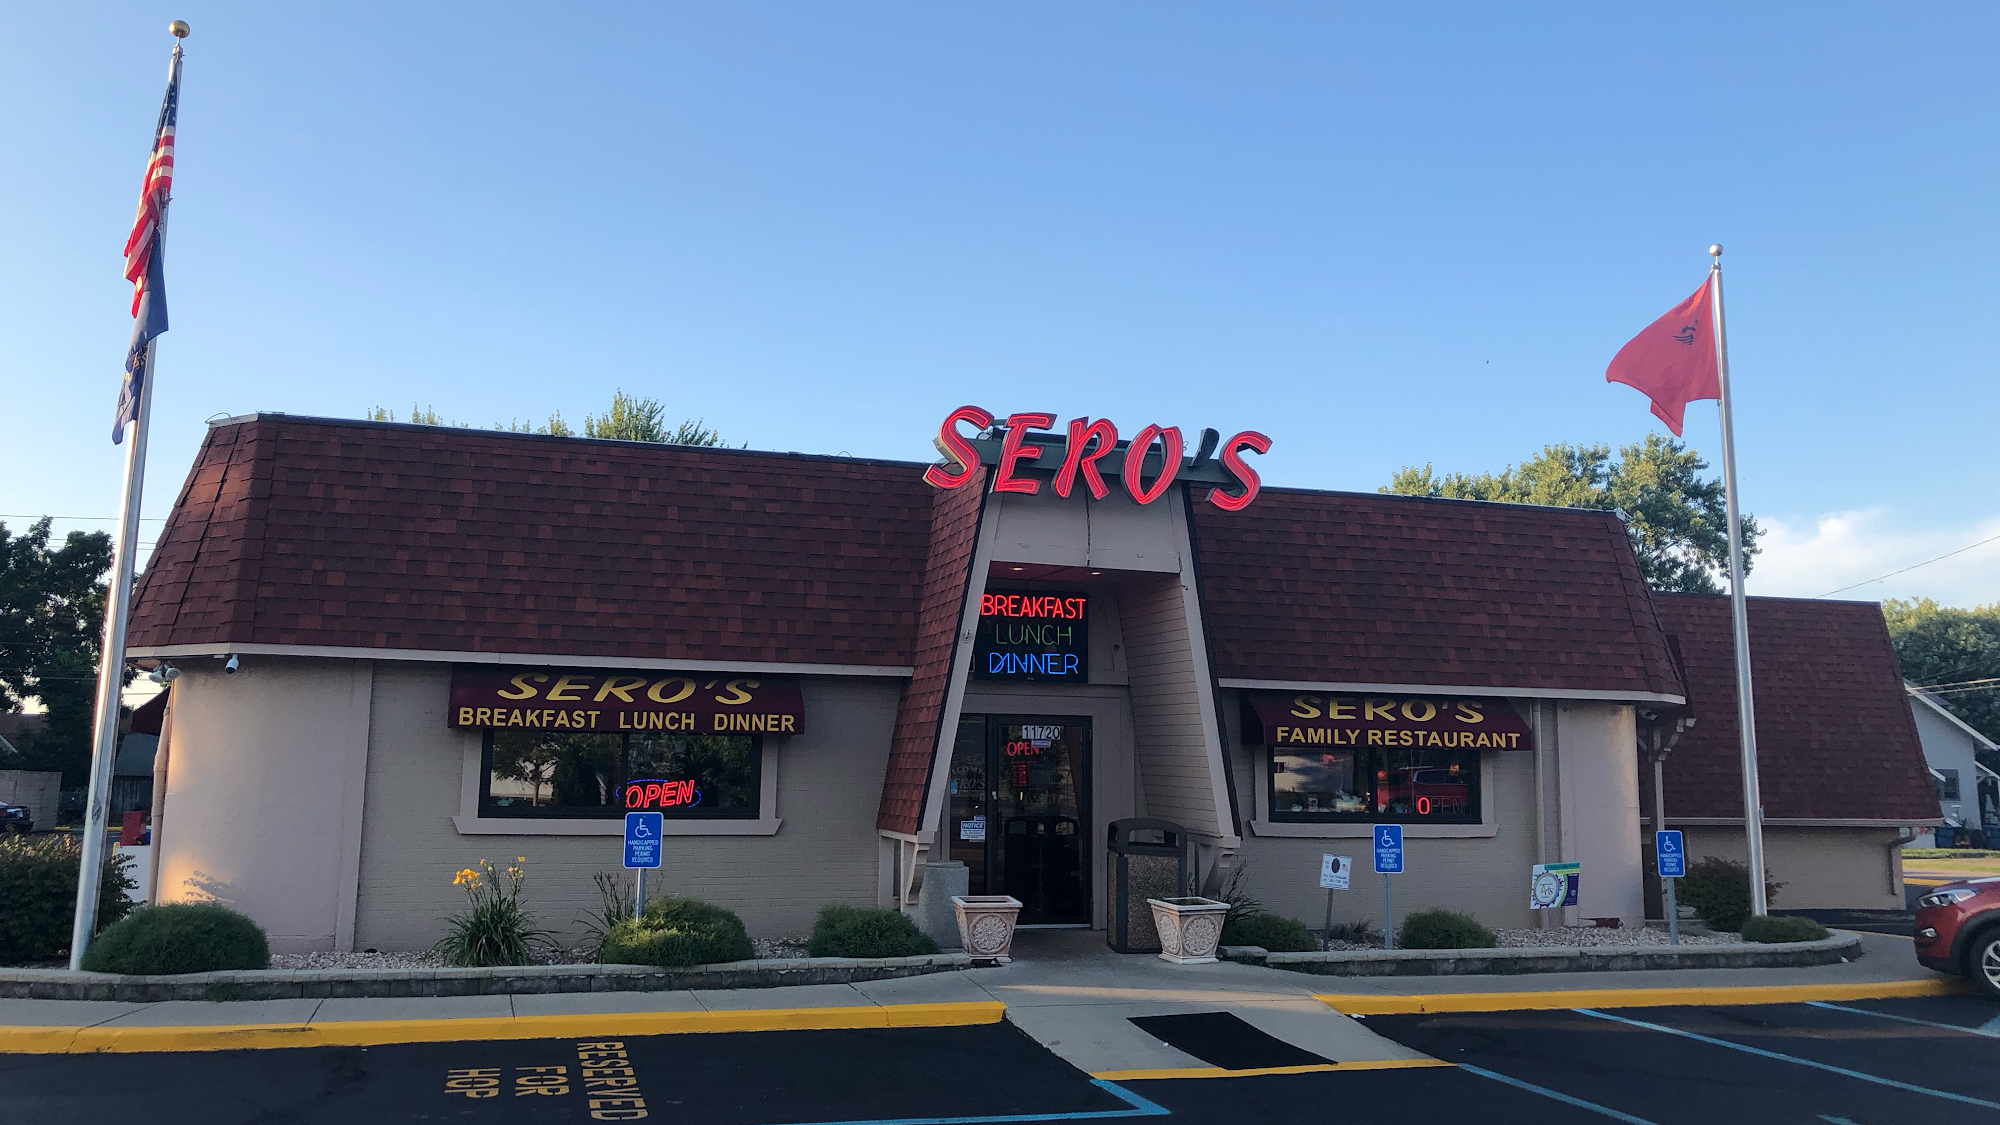 Sero's Family Restaurant